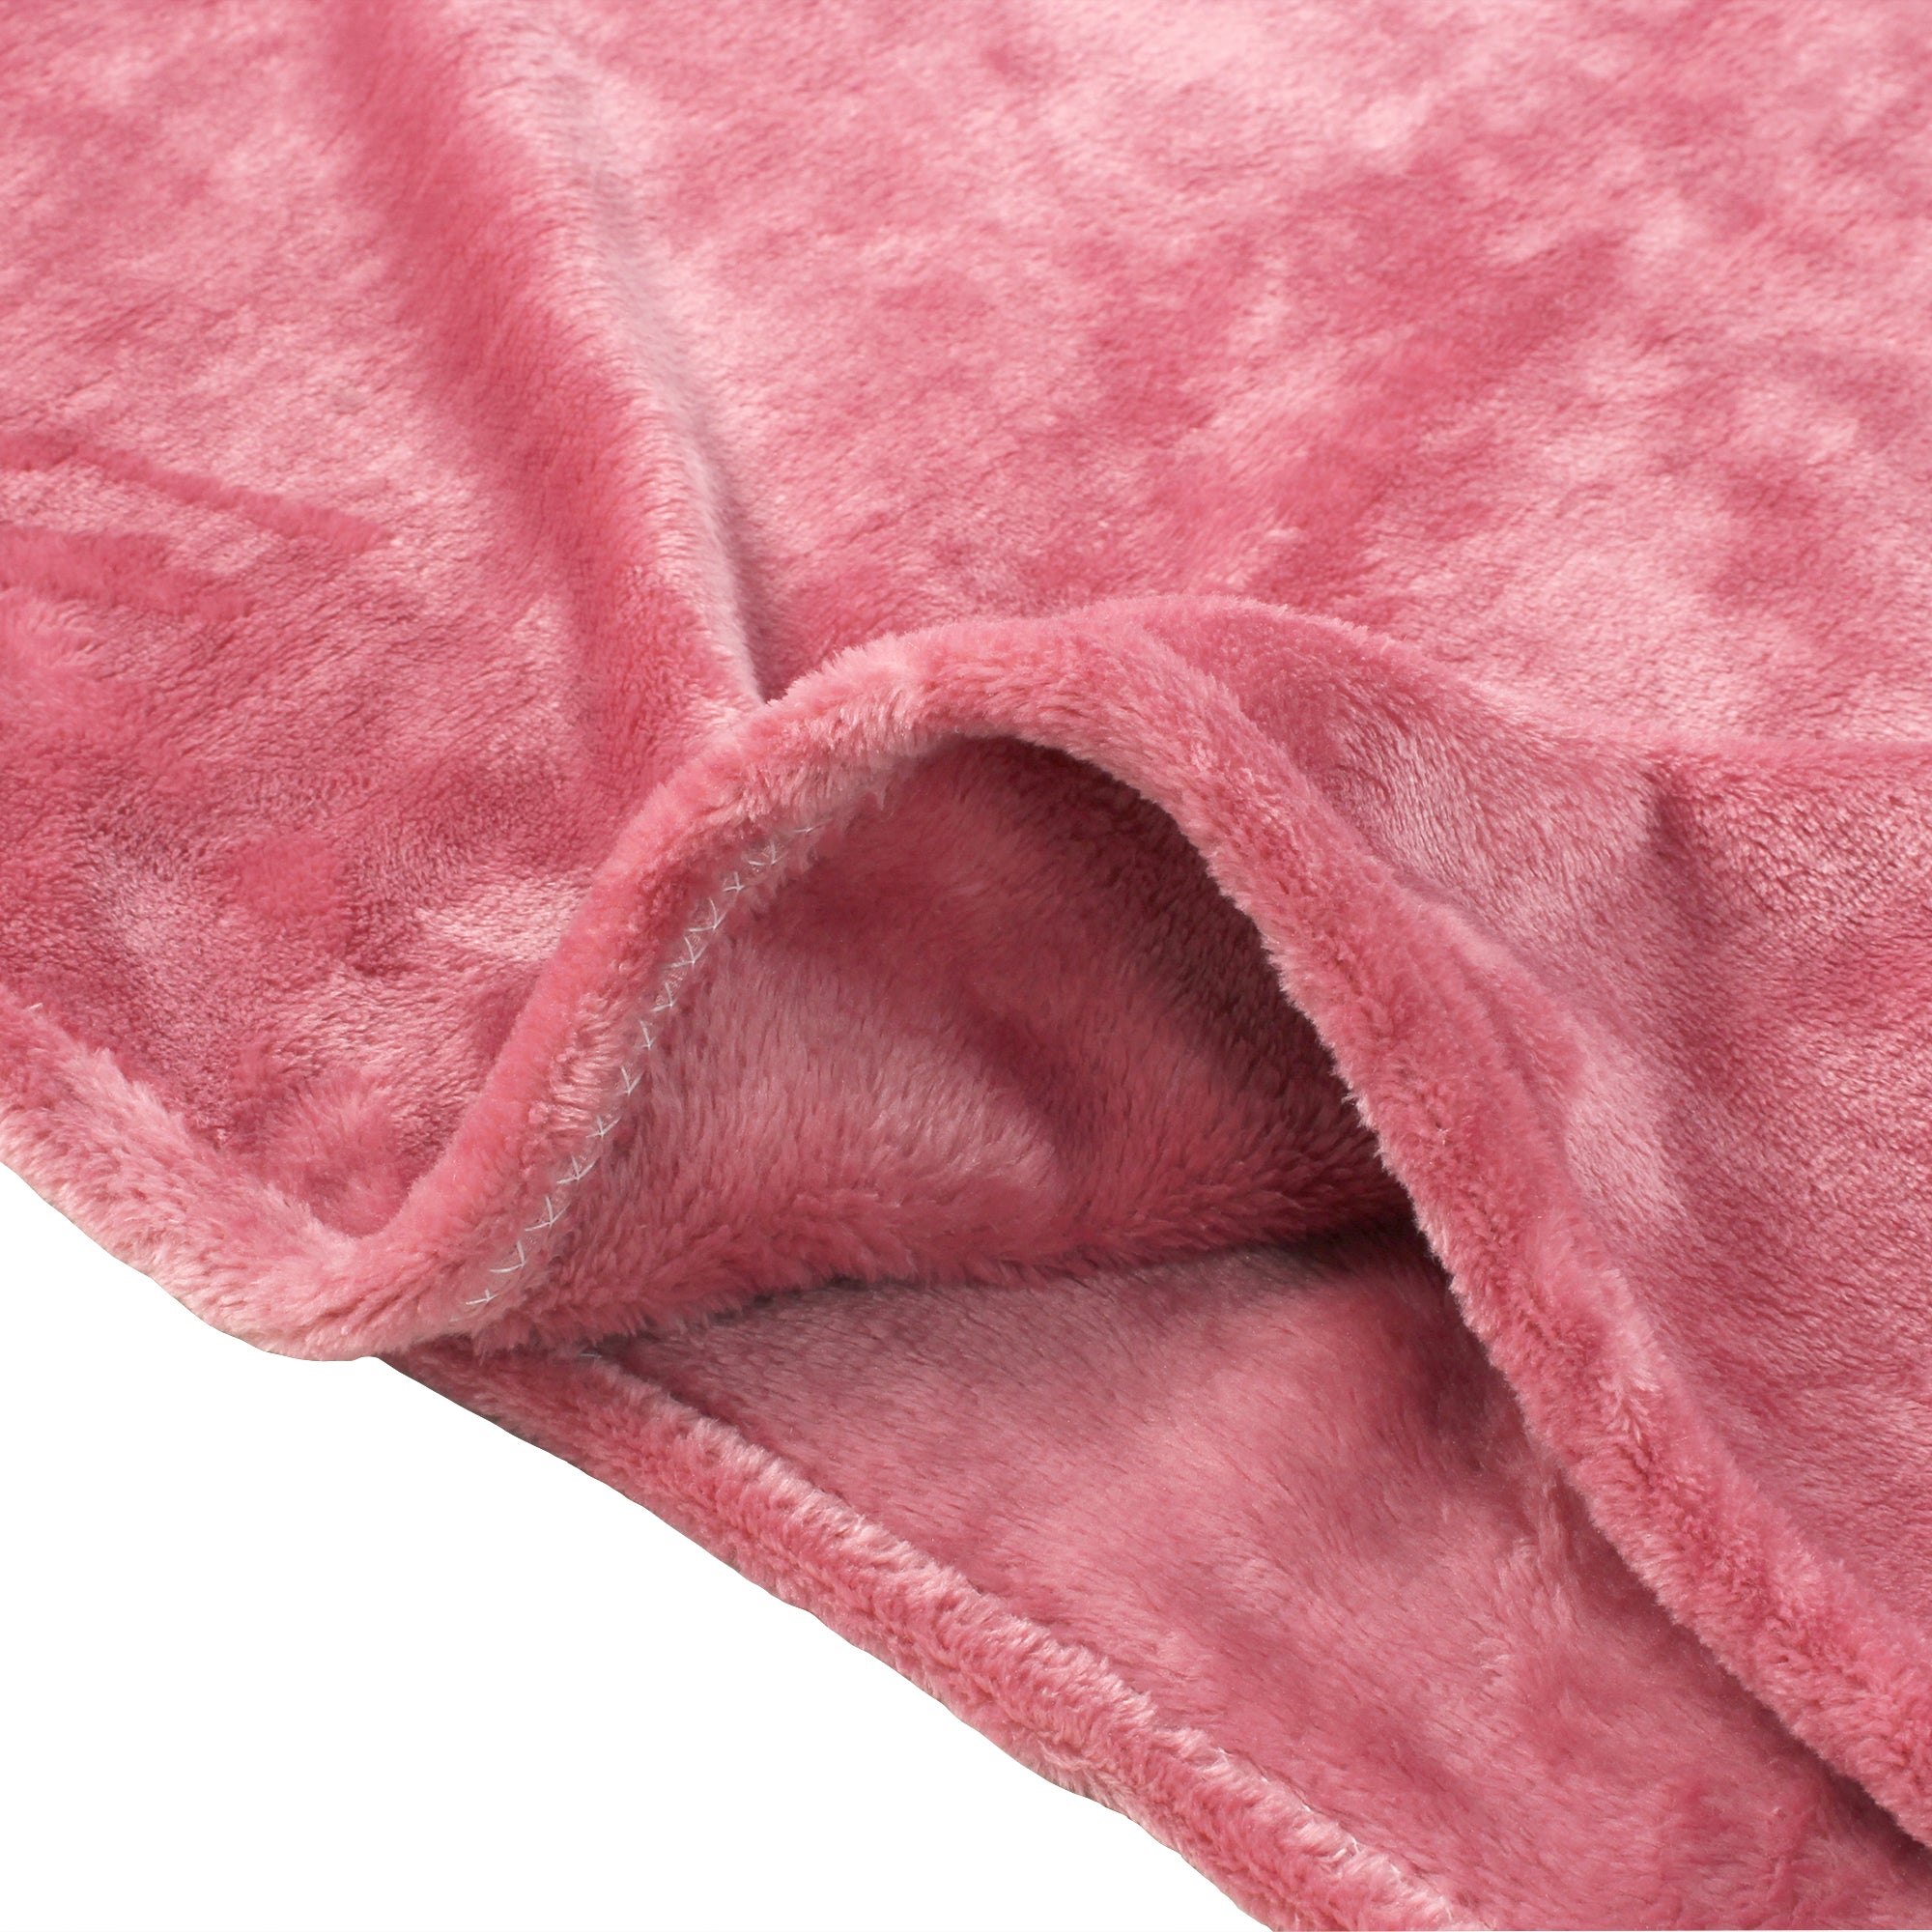 Premium Light Pink Double Flannel Blanket